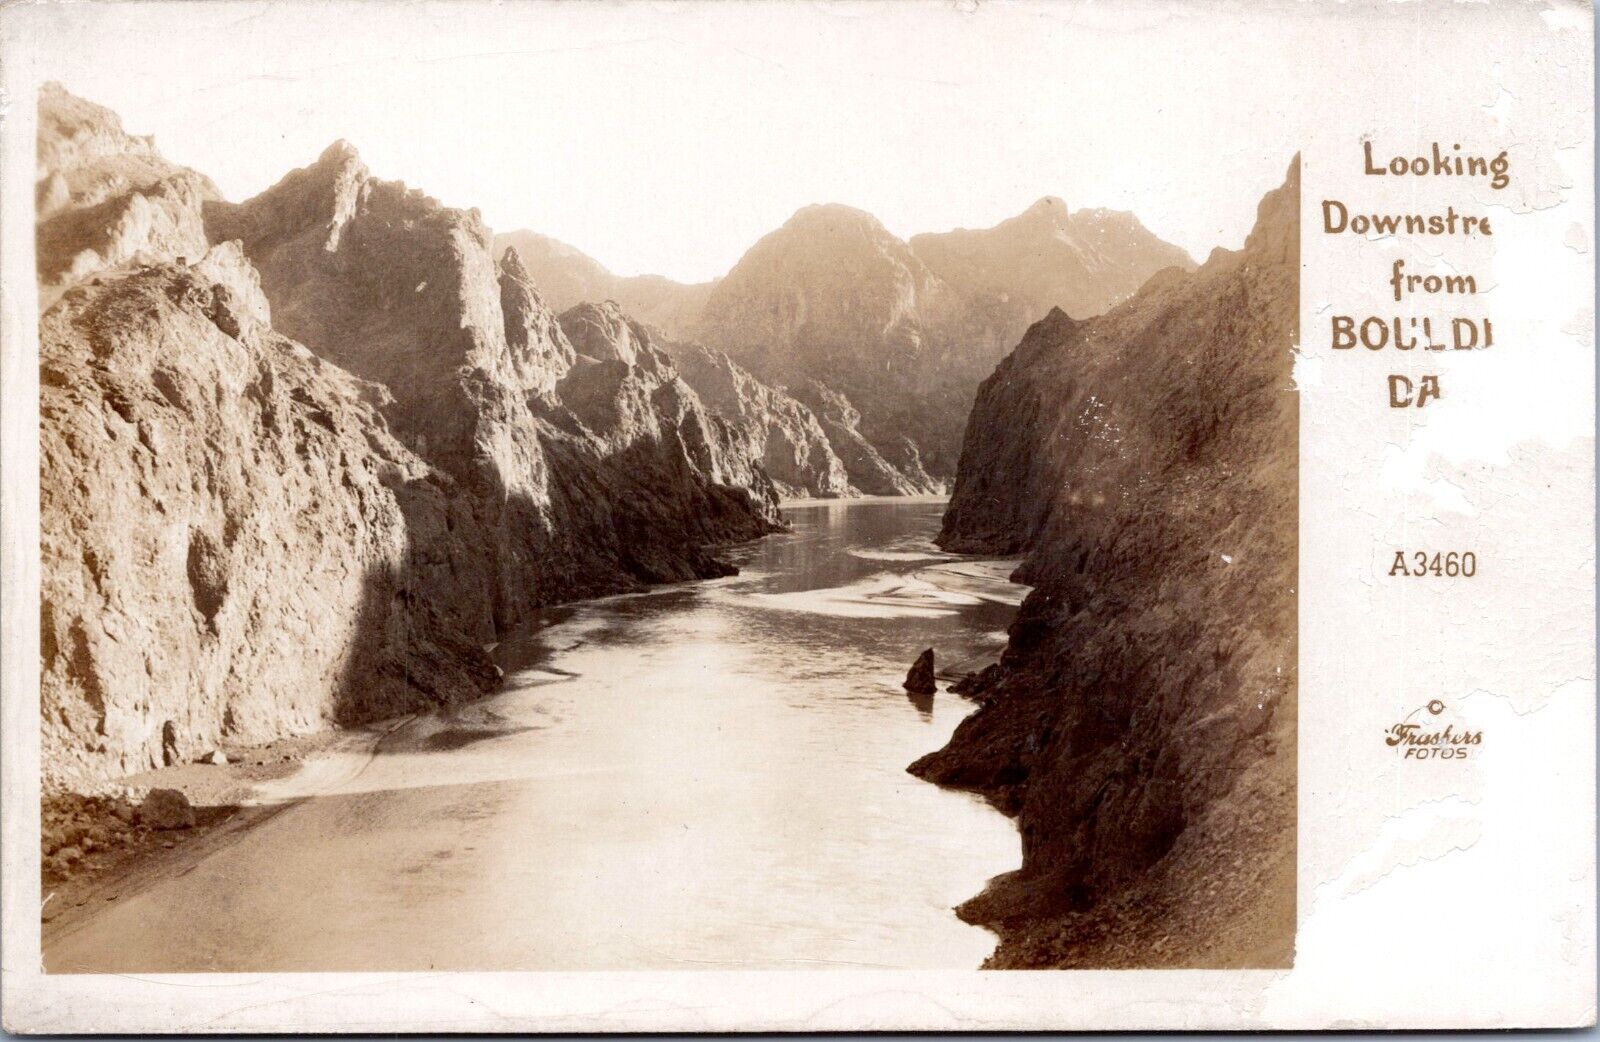 RPPC Looking Downstream from Boulder Dam, Nevada- Frashers Photo Postcard c1940s